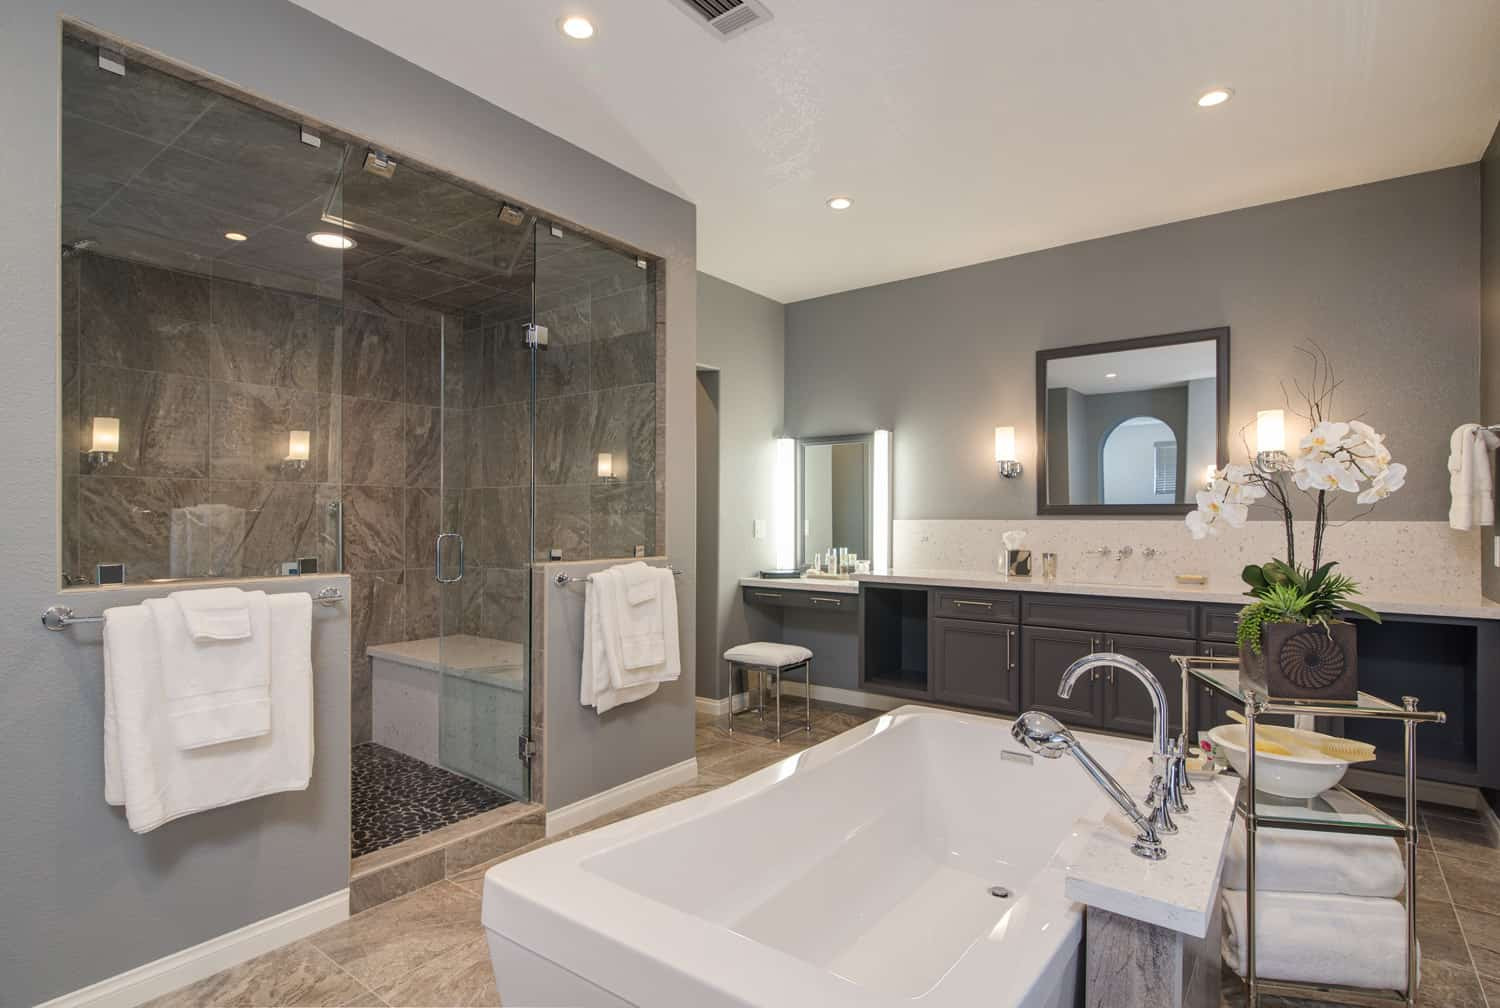 Photos Of Bathroom Remodels
 San Diego Bathroom Remodeling & Design